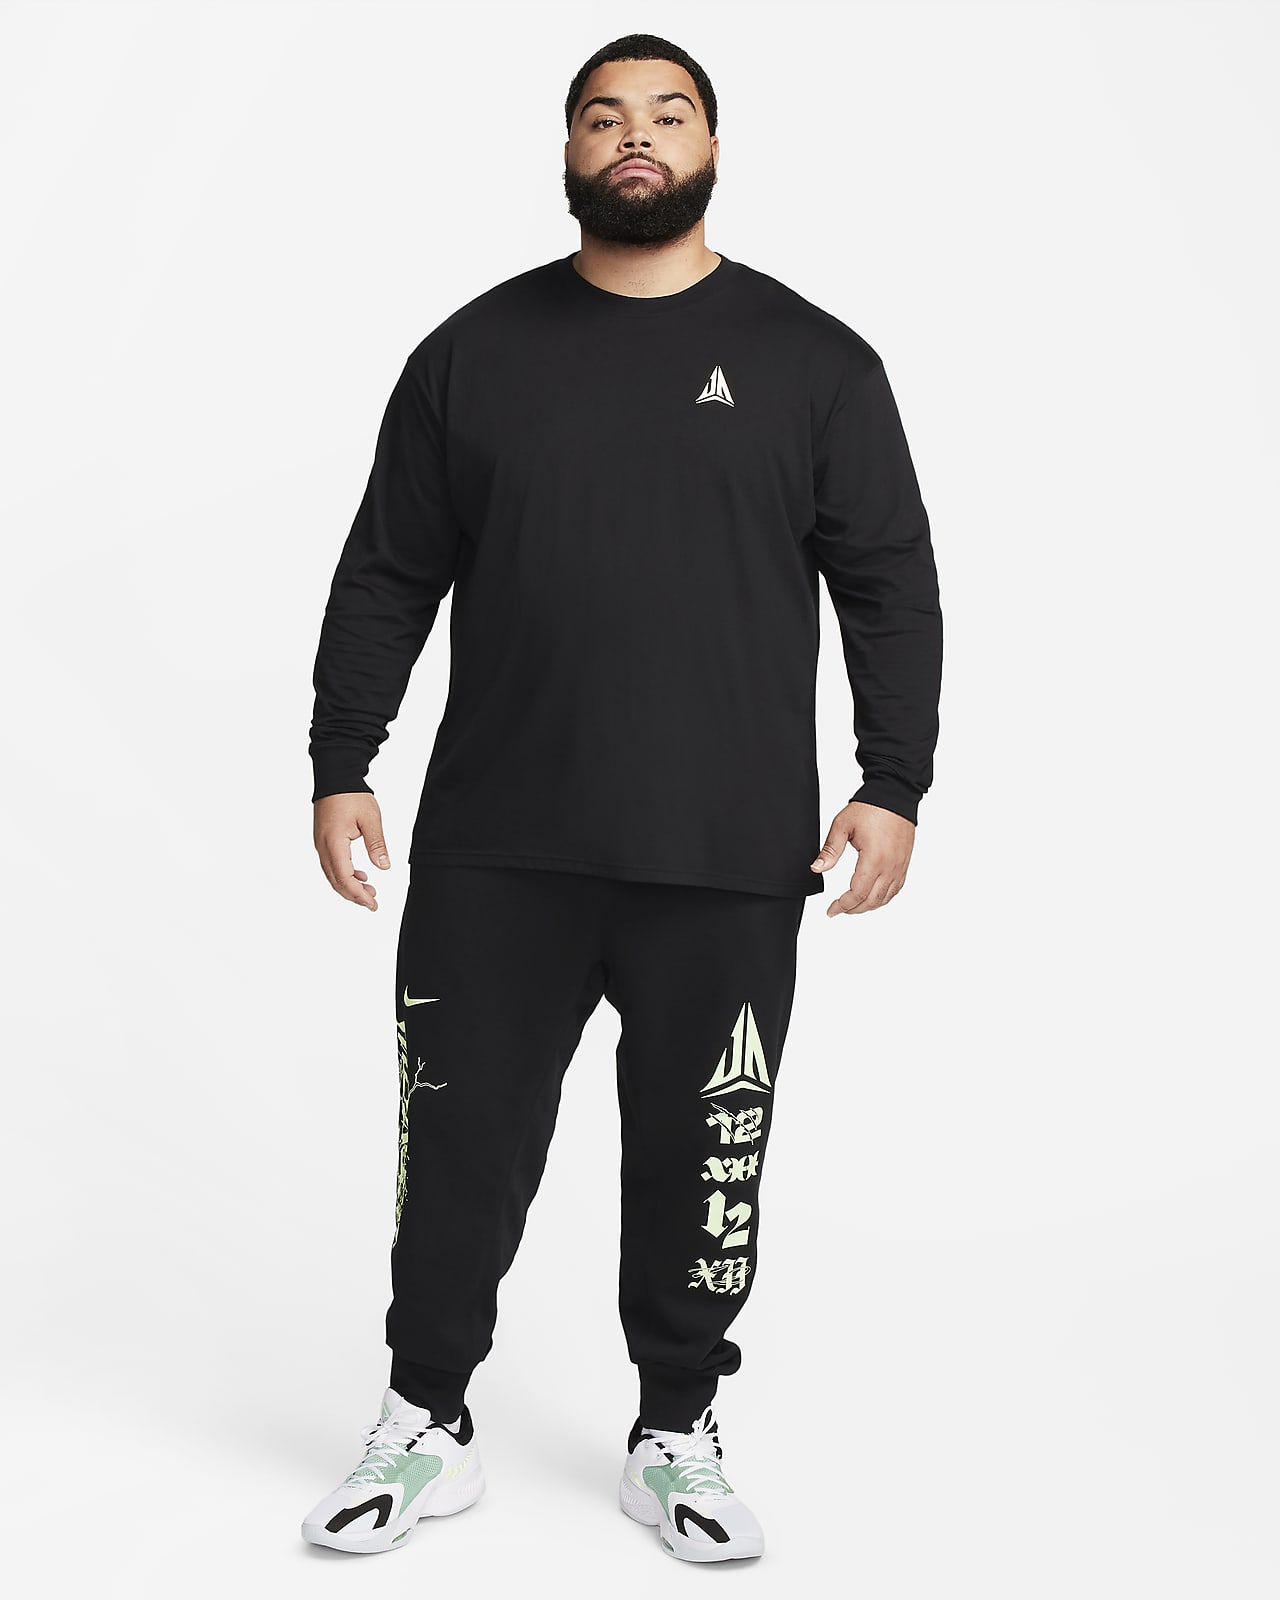 JA Men's Max90 Long-Sleeve T-Shirt. Nike LU